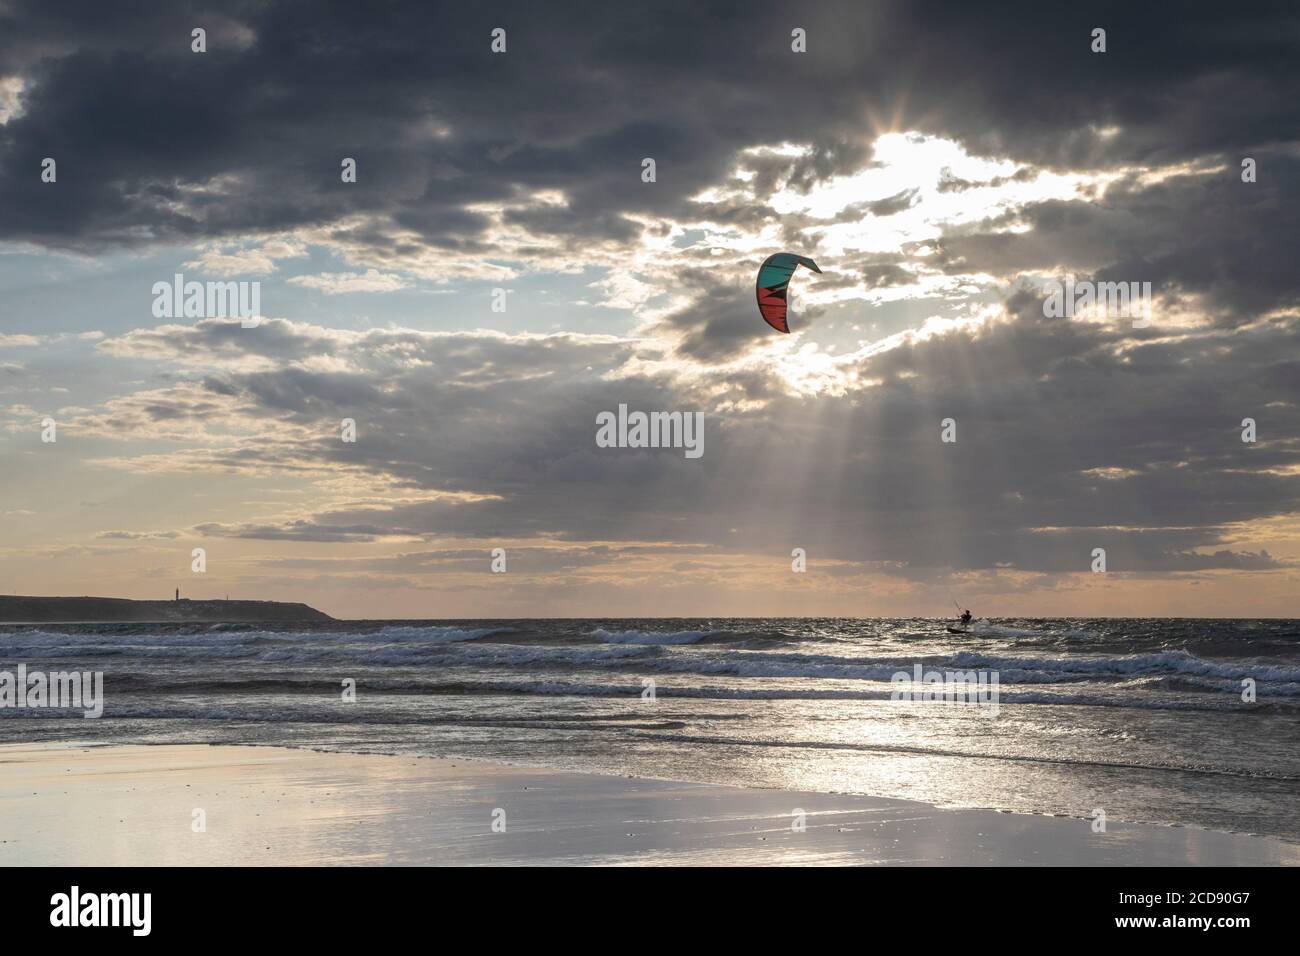 France, Pas de Calais, Wissant, kitesurfing Stock Photo